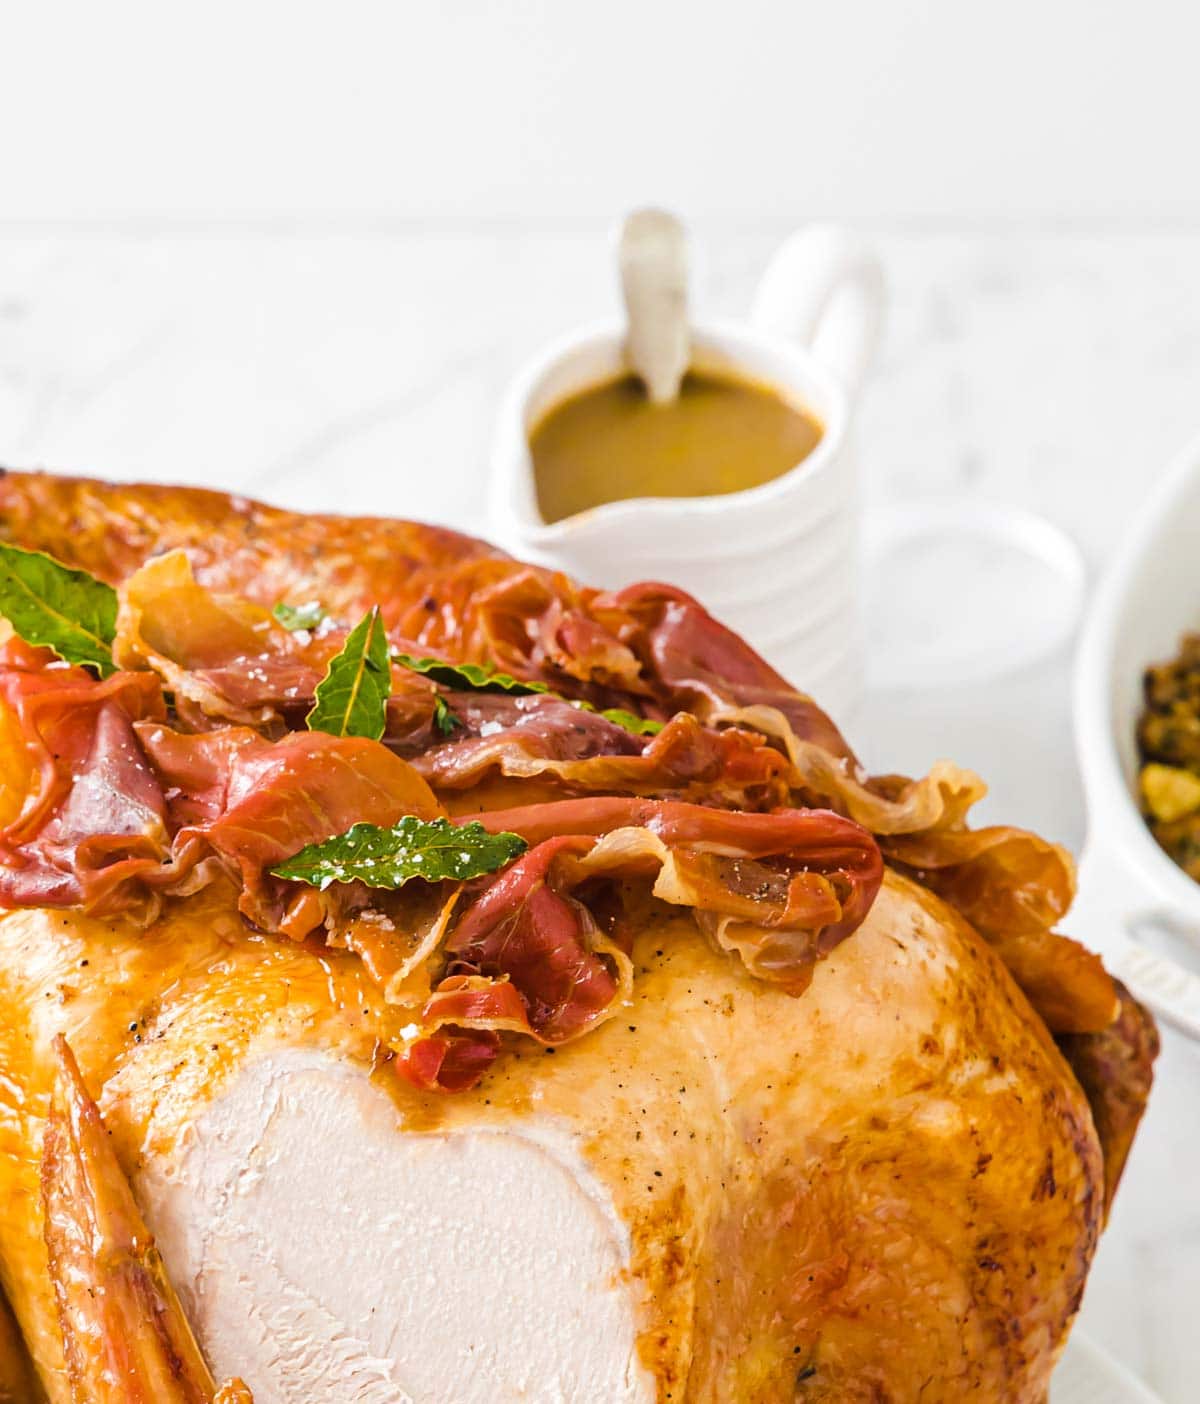 a jug of gravy behind a roasted turkey